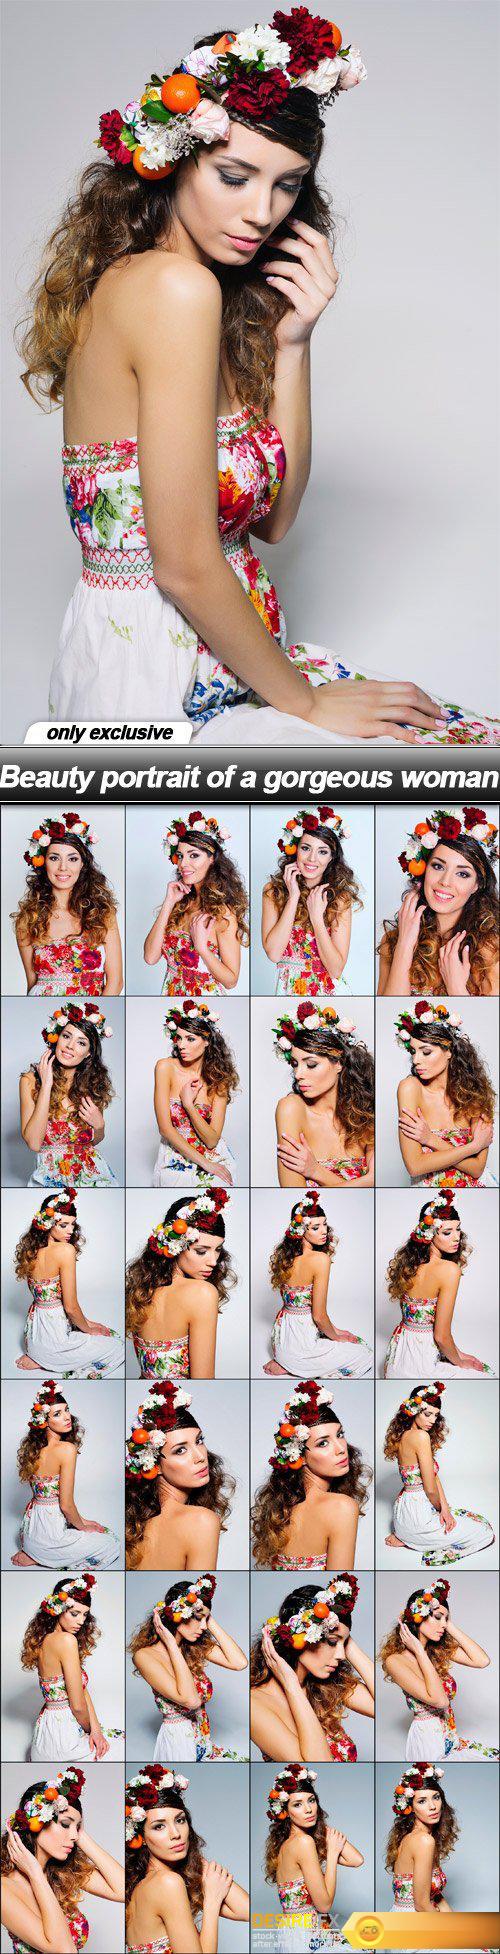 Beauty portrait of a gorgeous woman - 25 UHQ JPEG